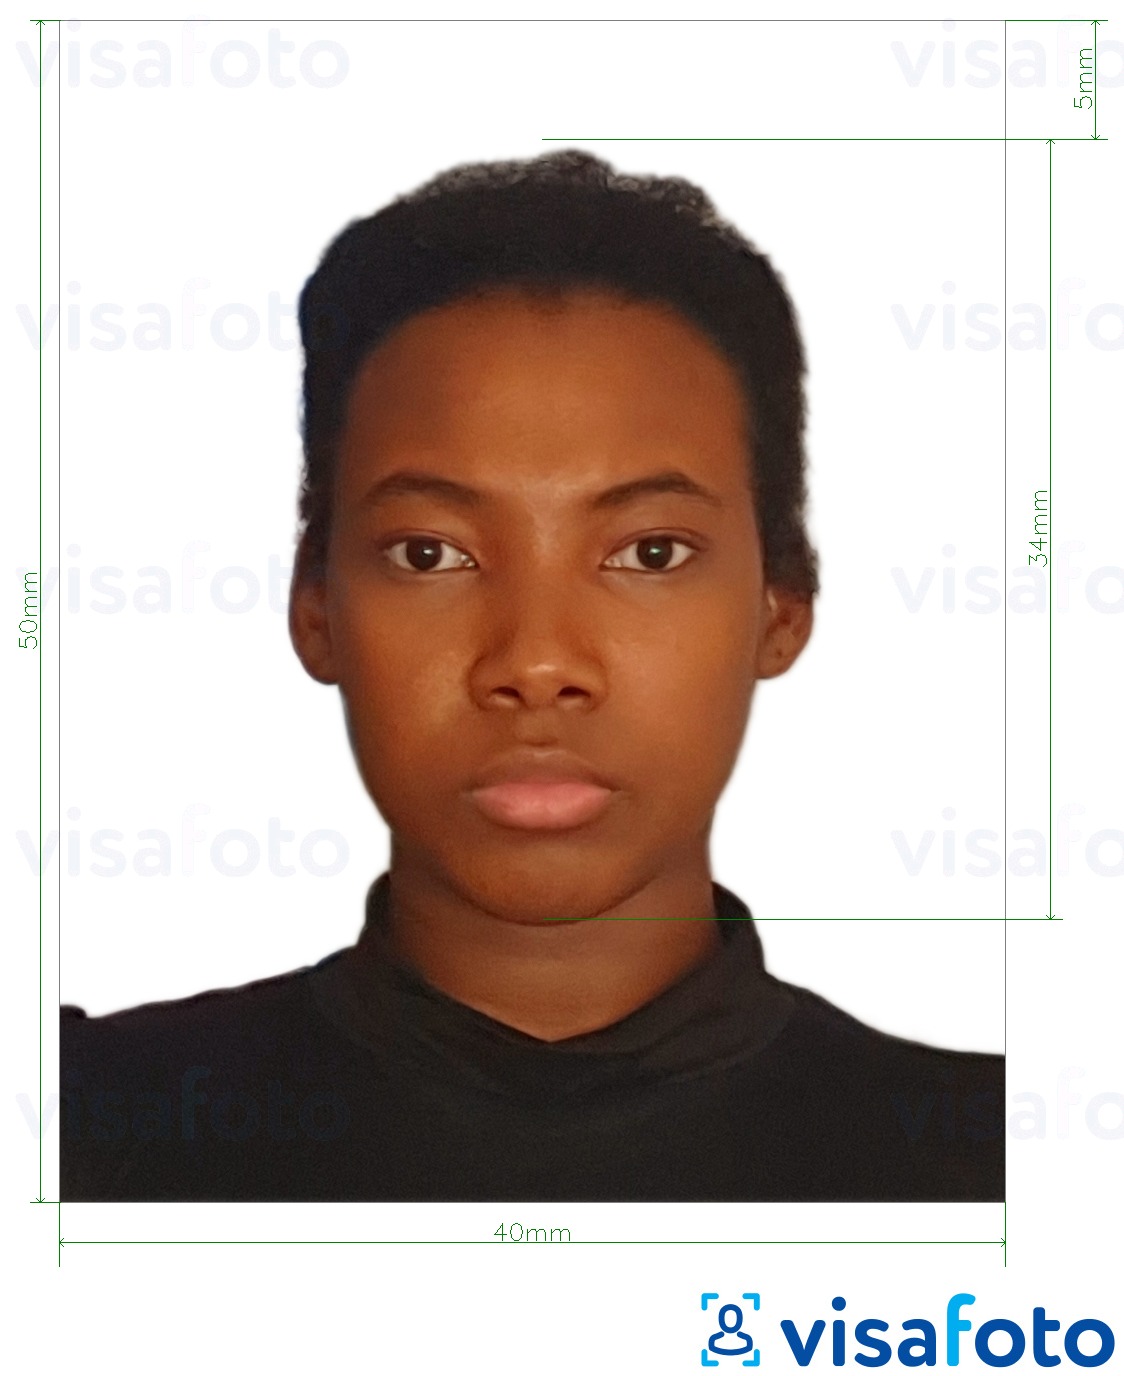 Contoh foto untuk Pasport Cameroon 4x5 cm (40x50 mm) dengan spesifikasi saiz yang tepat.